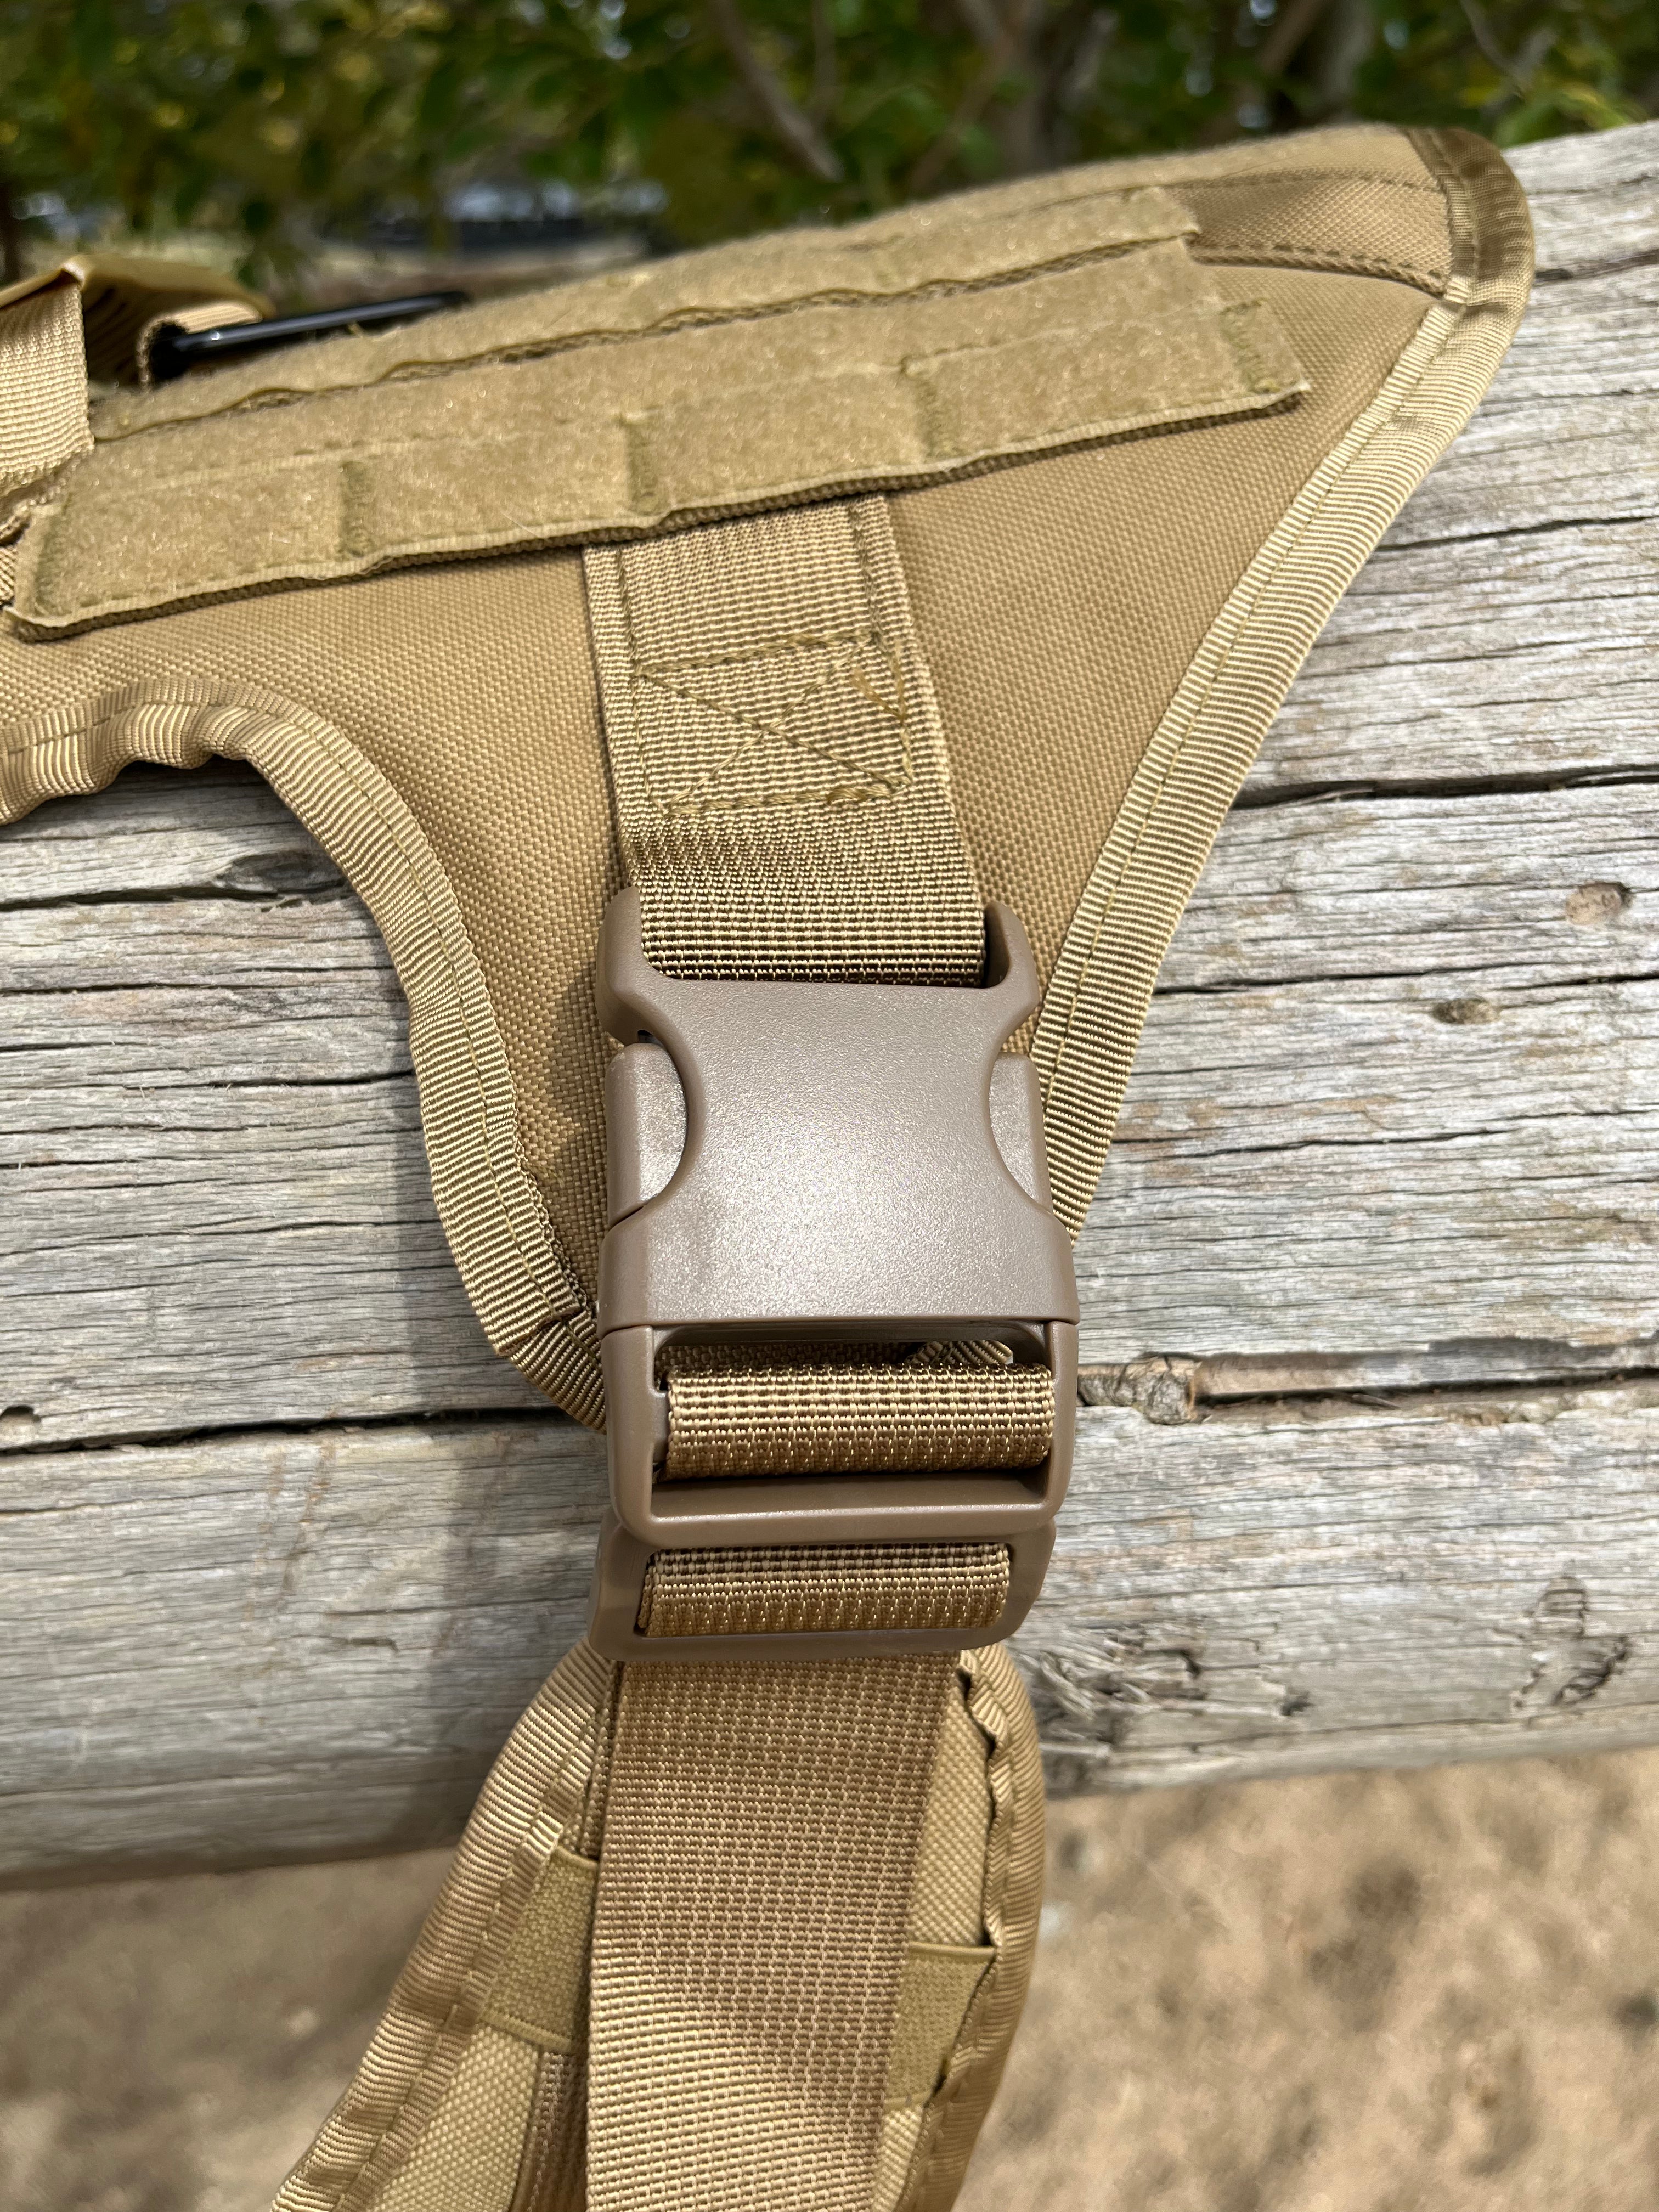 Tactical Training Harness - Desert Tan